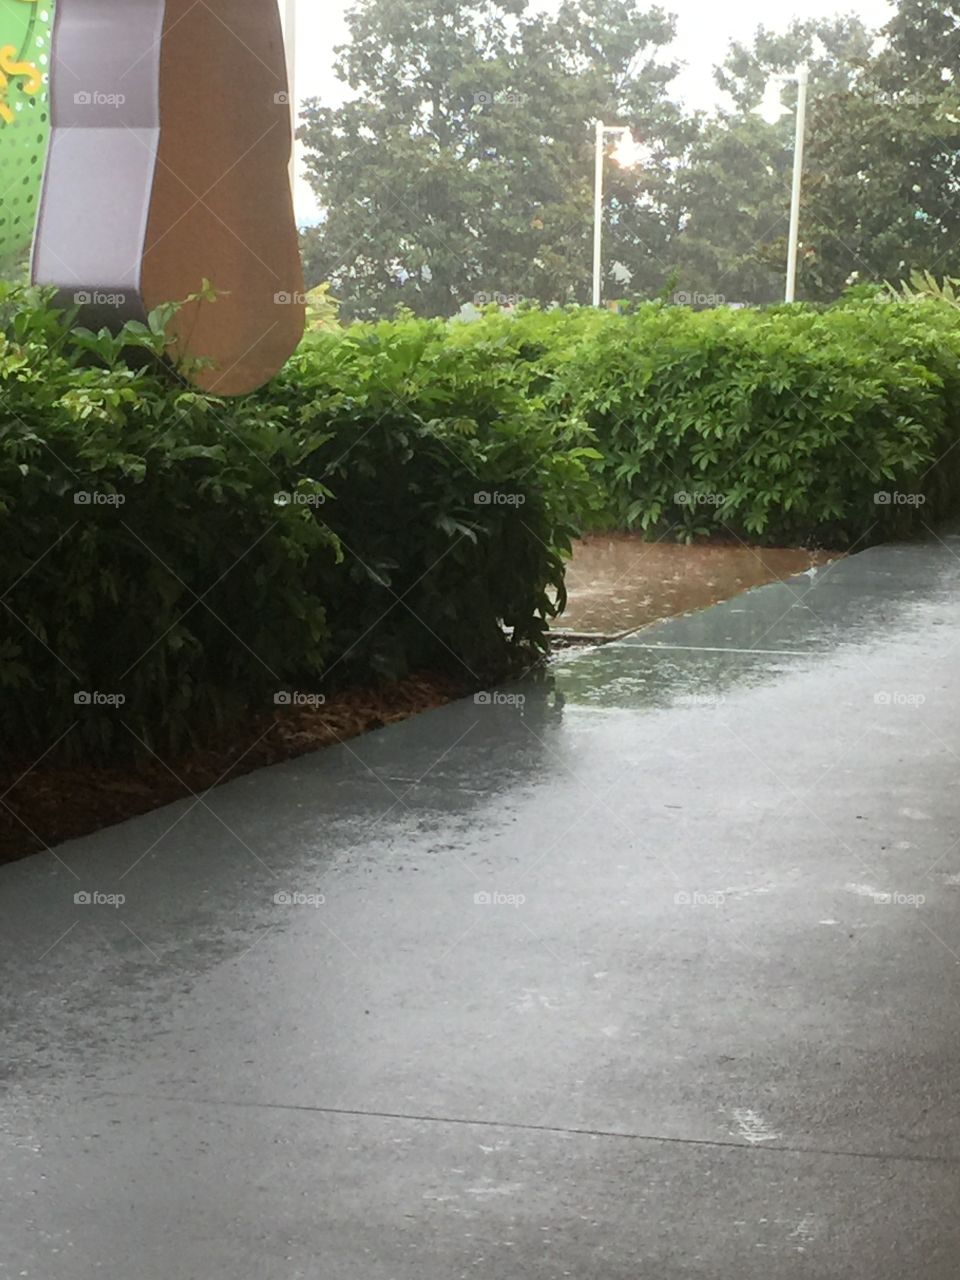 Florida rain